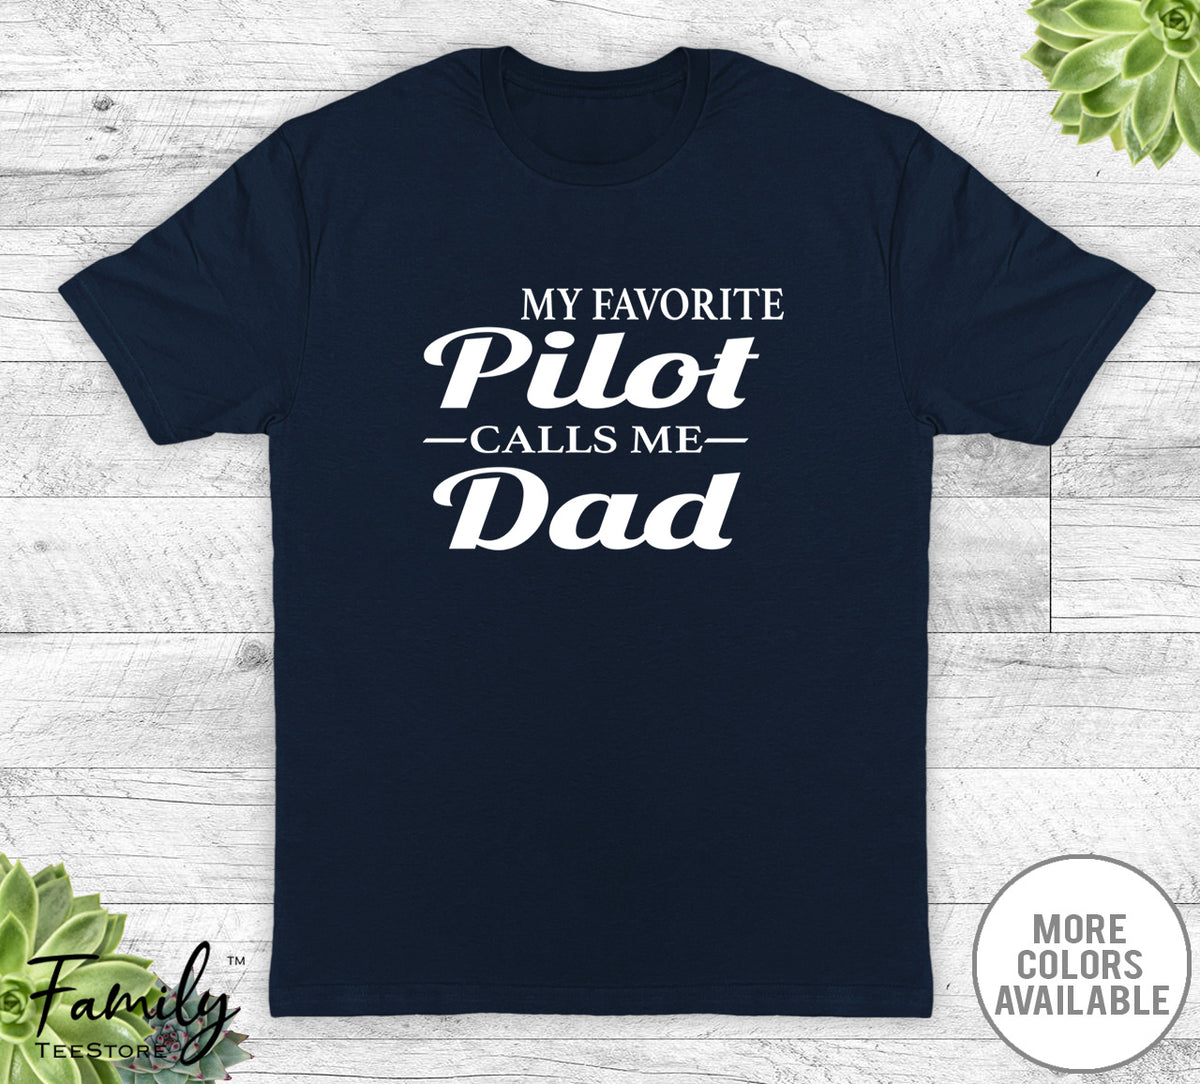 My Favorite Pilot Calls Me Dad - Unisex T-shirt - Pilot's Dad Shirt - Pilot's Dad Gift